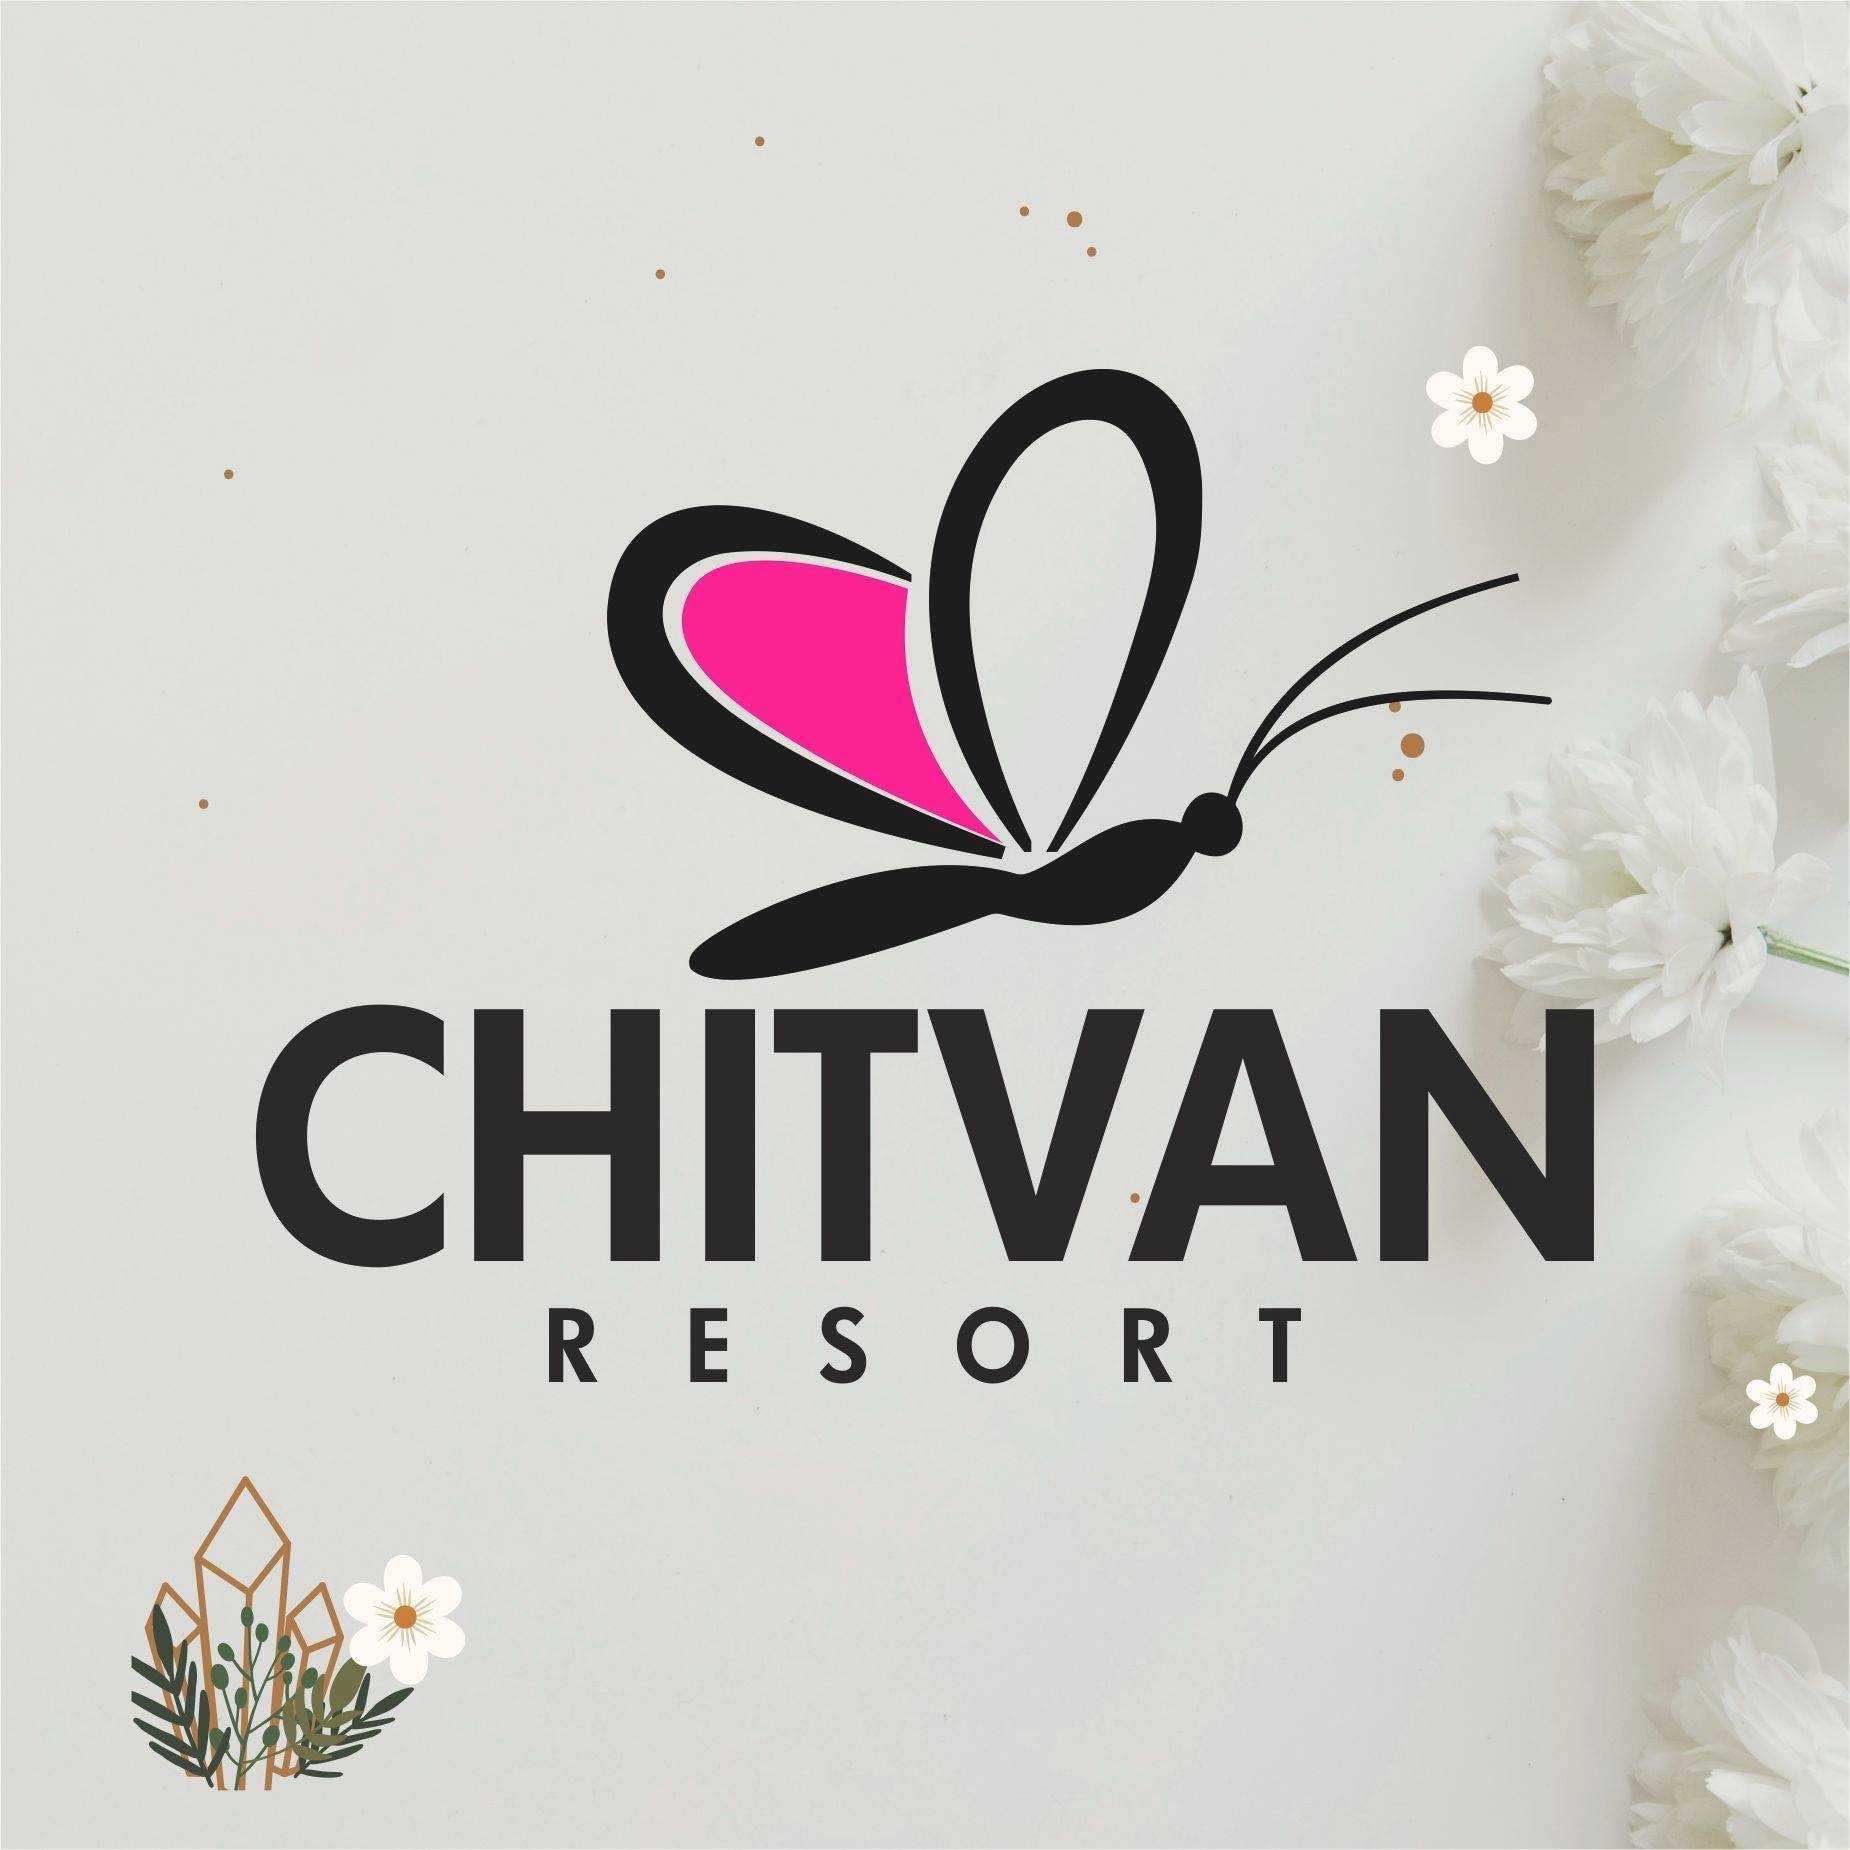 Chitvan